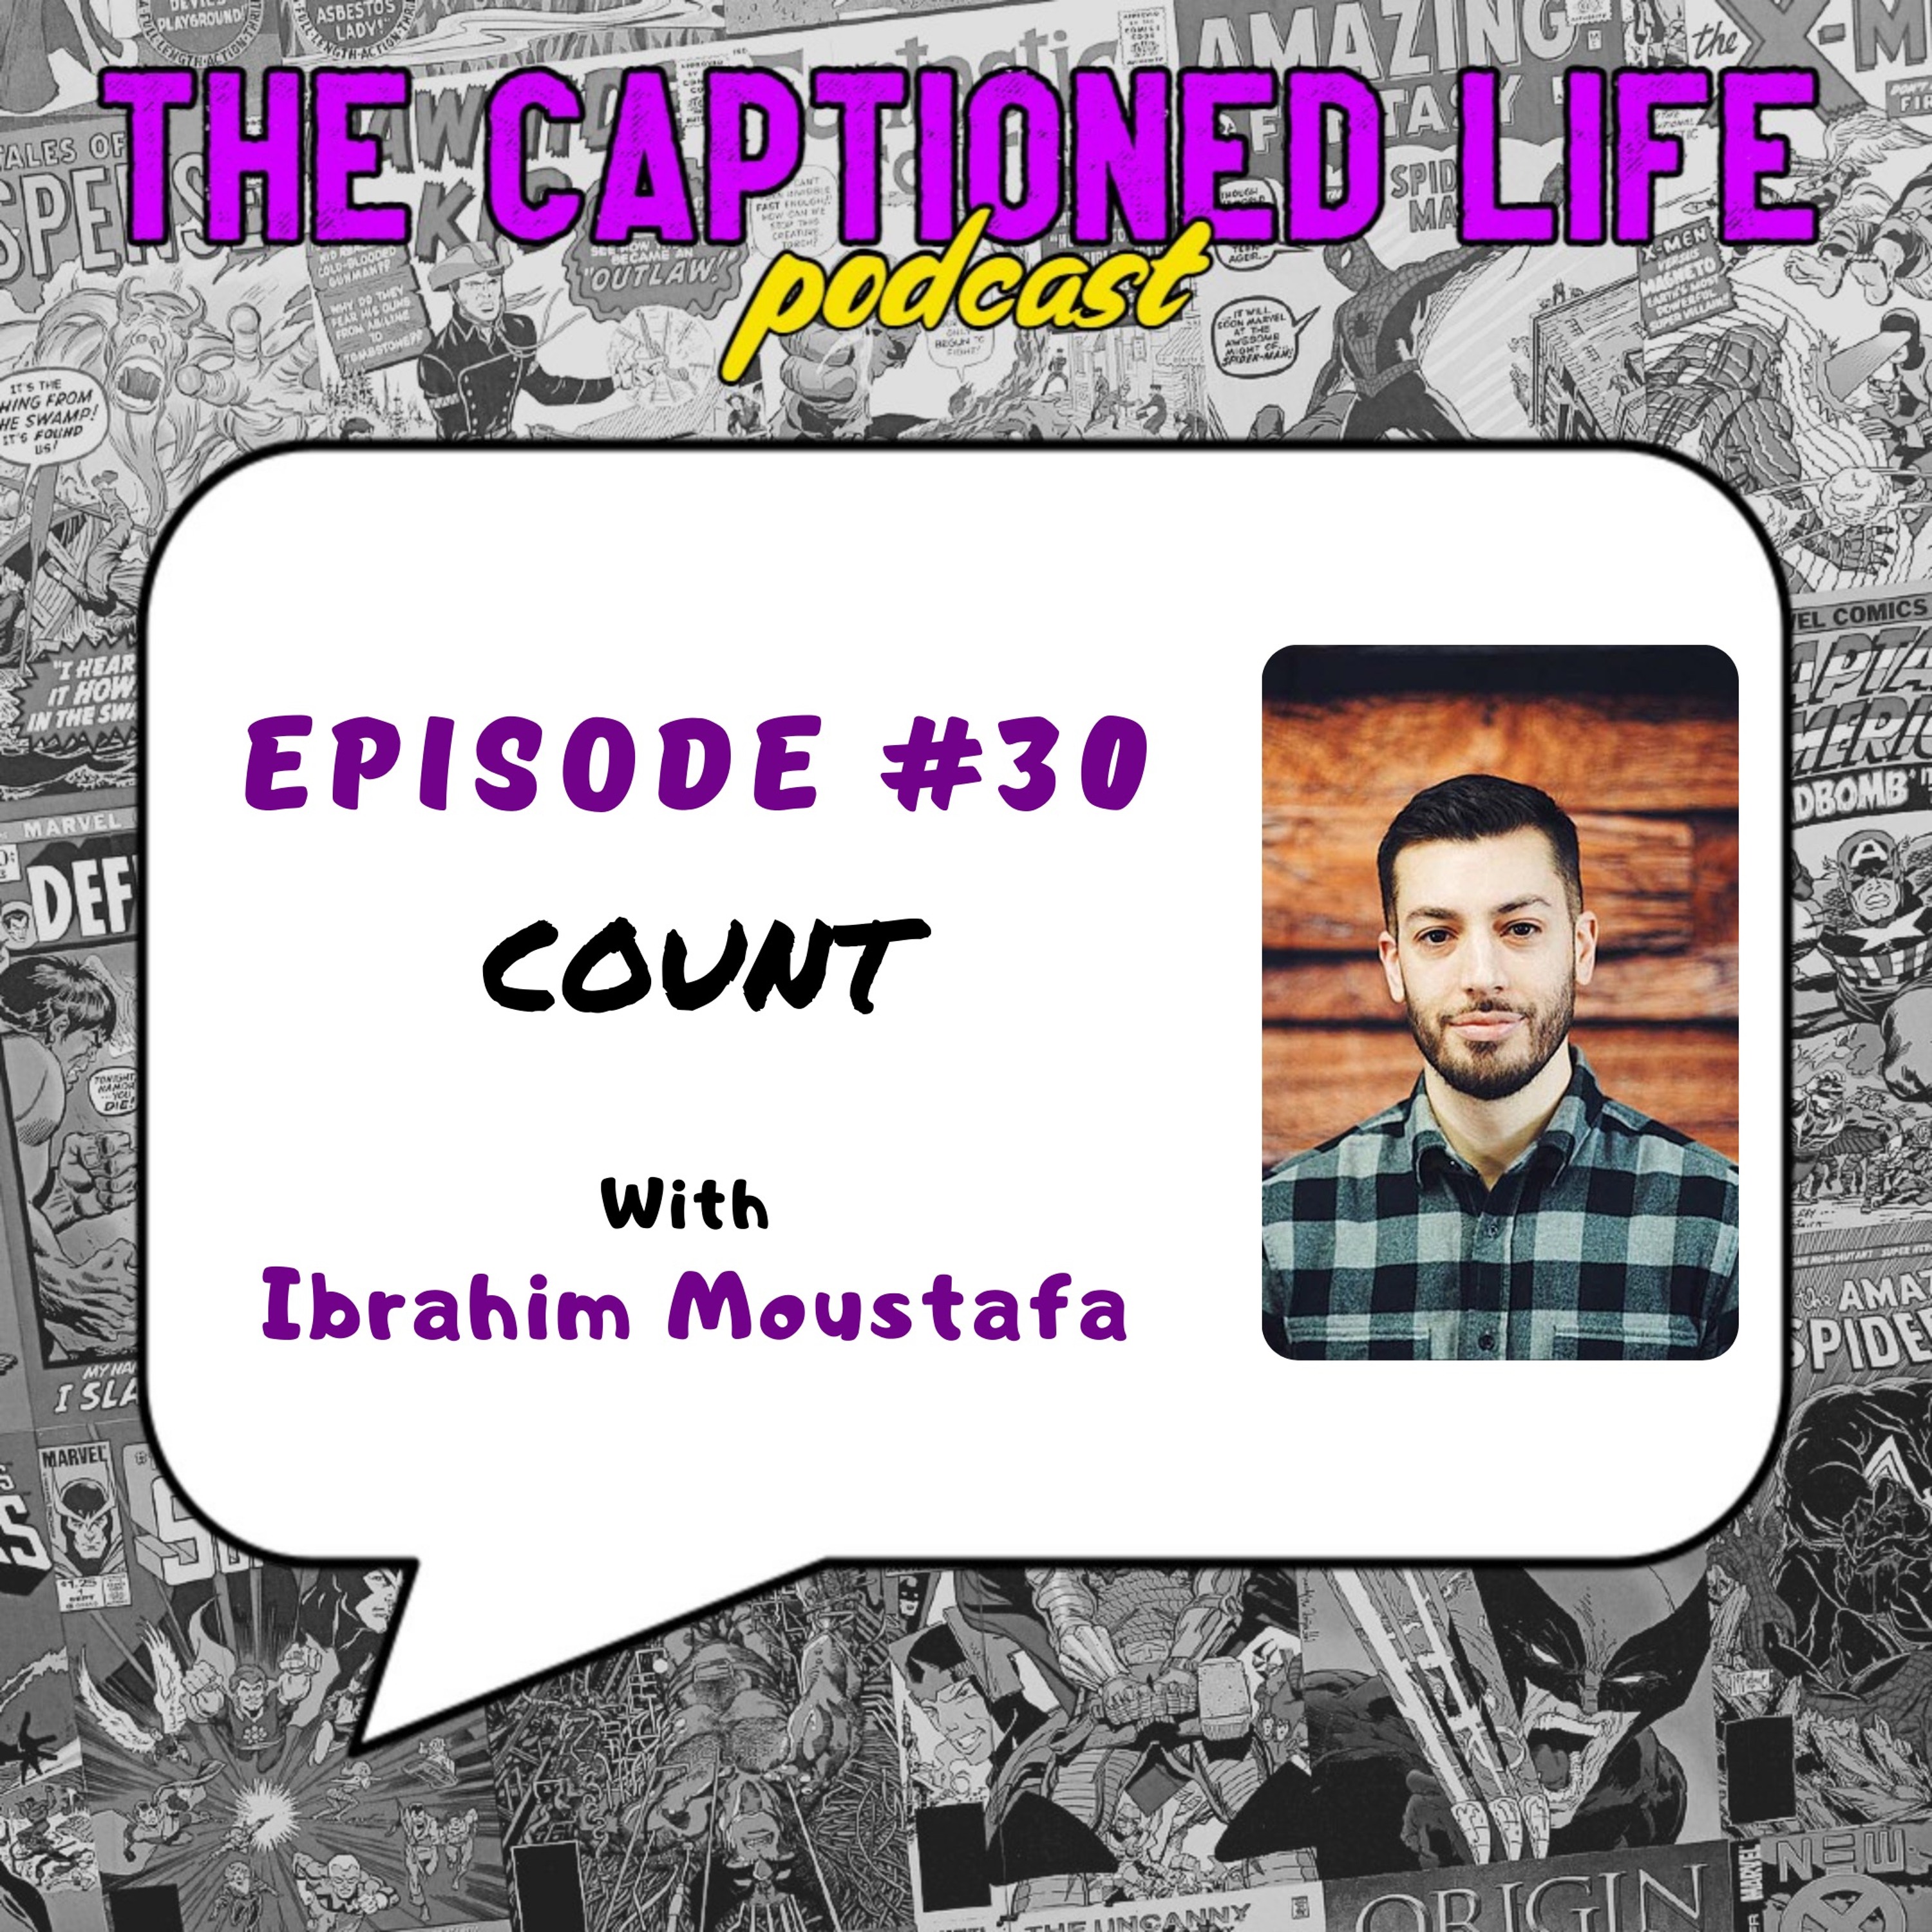 #30 Count With Ibrahim Moustafa